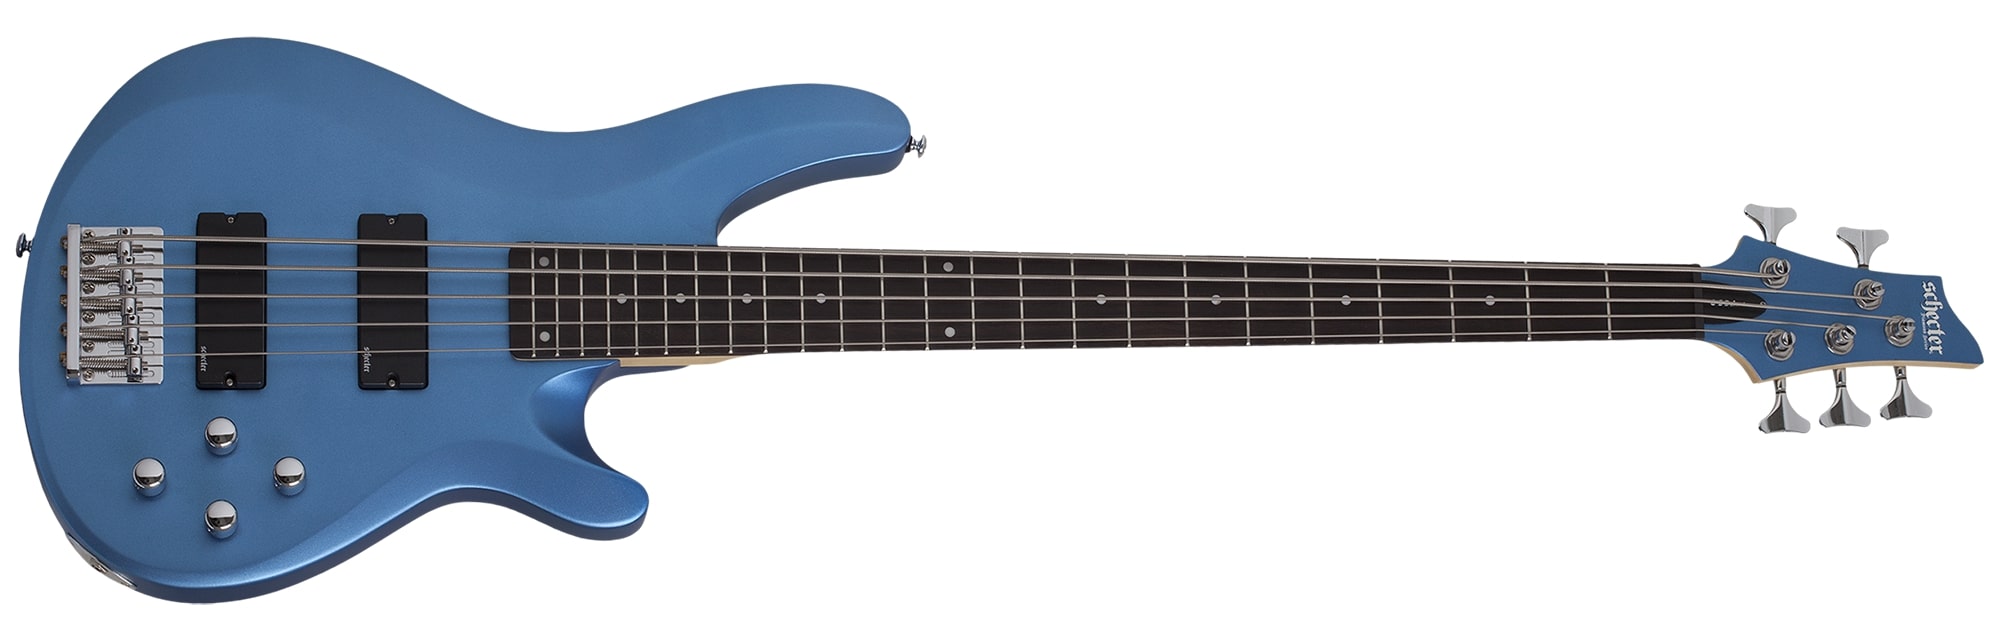 Schecter C-5 Deluxe 5-String Electric Bass, Satin Metallic Light Blue 588-SHC